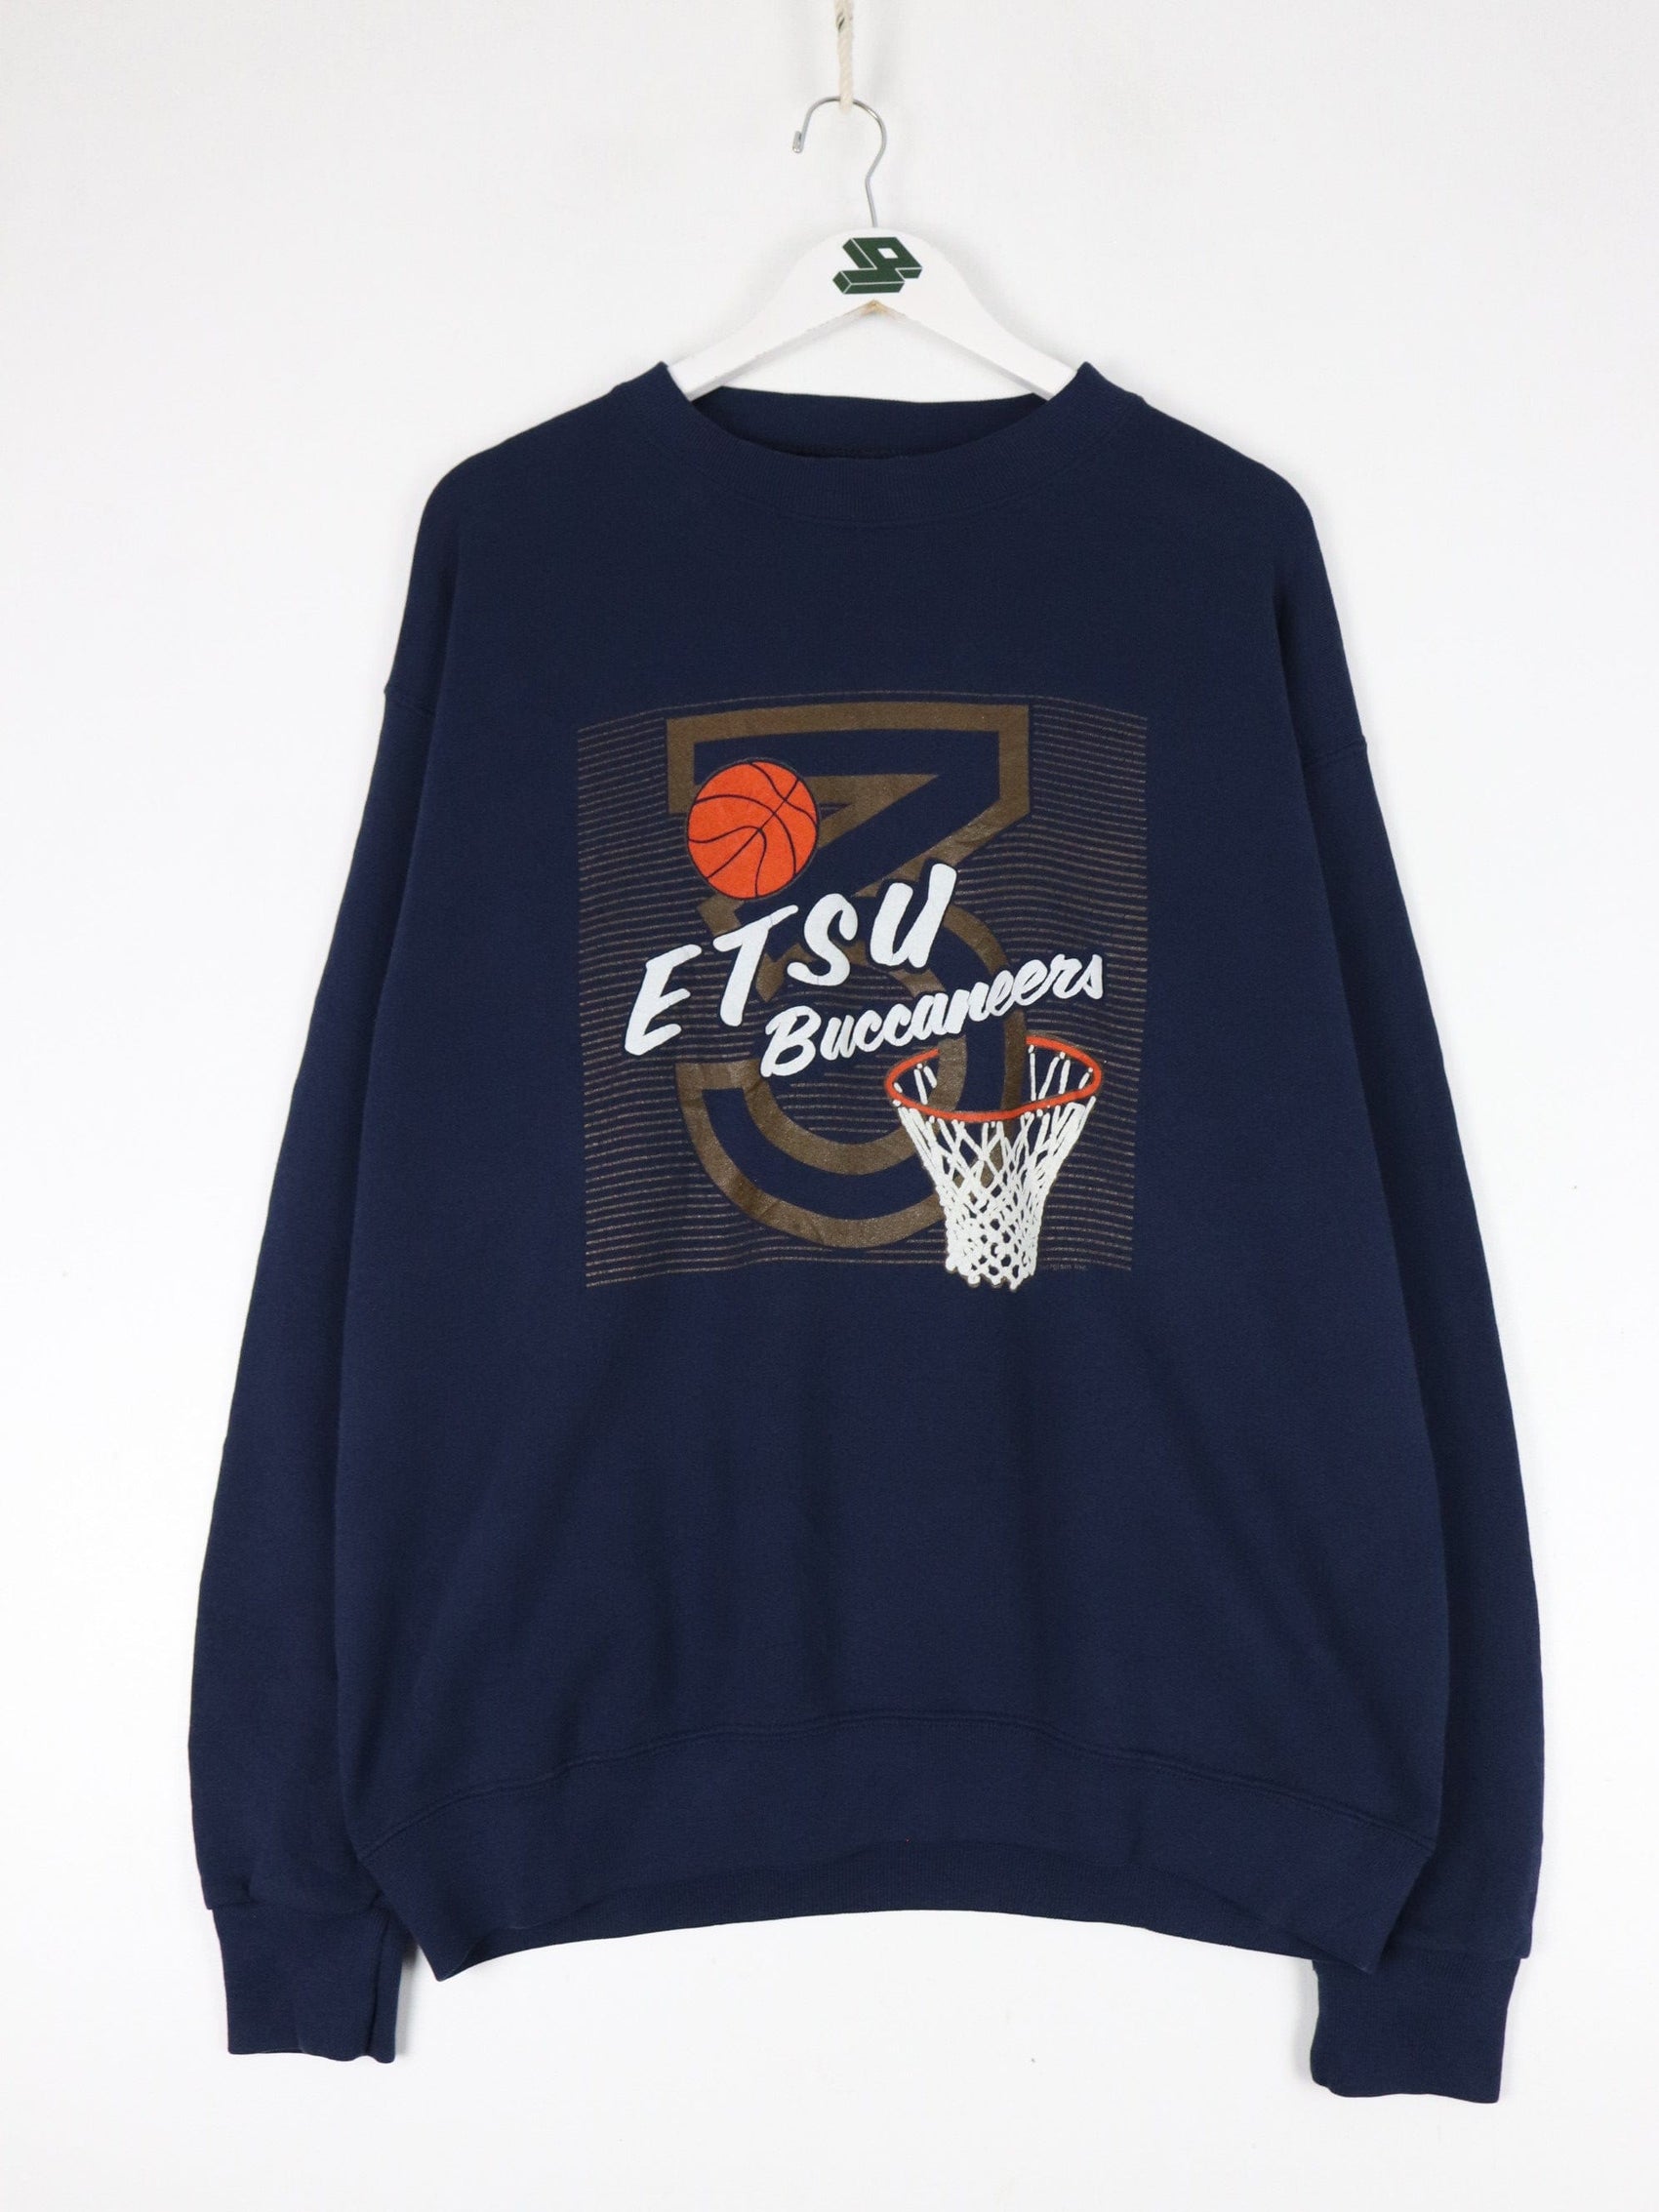 Collegiate Sweatshirts & Hoodies Vintage ETSU Sweatshirt Fits Mens Large Blue Basketball